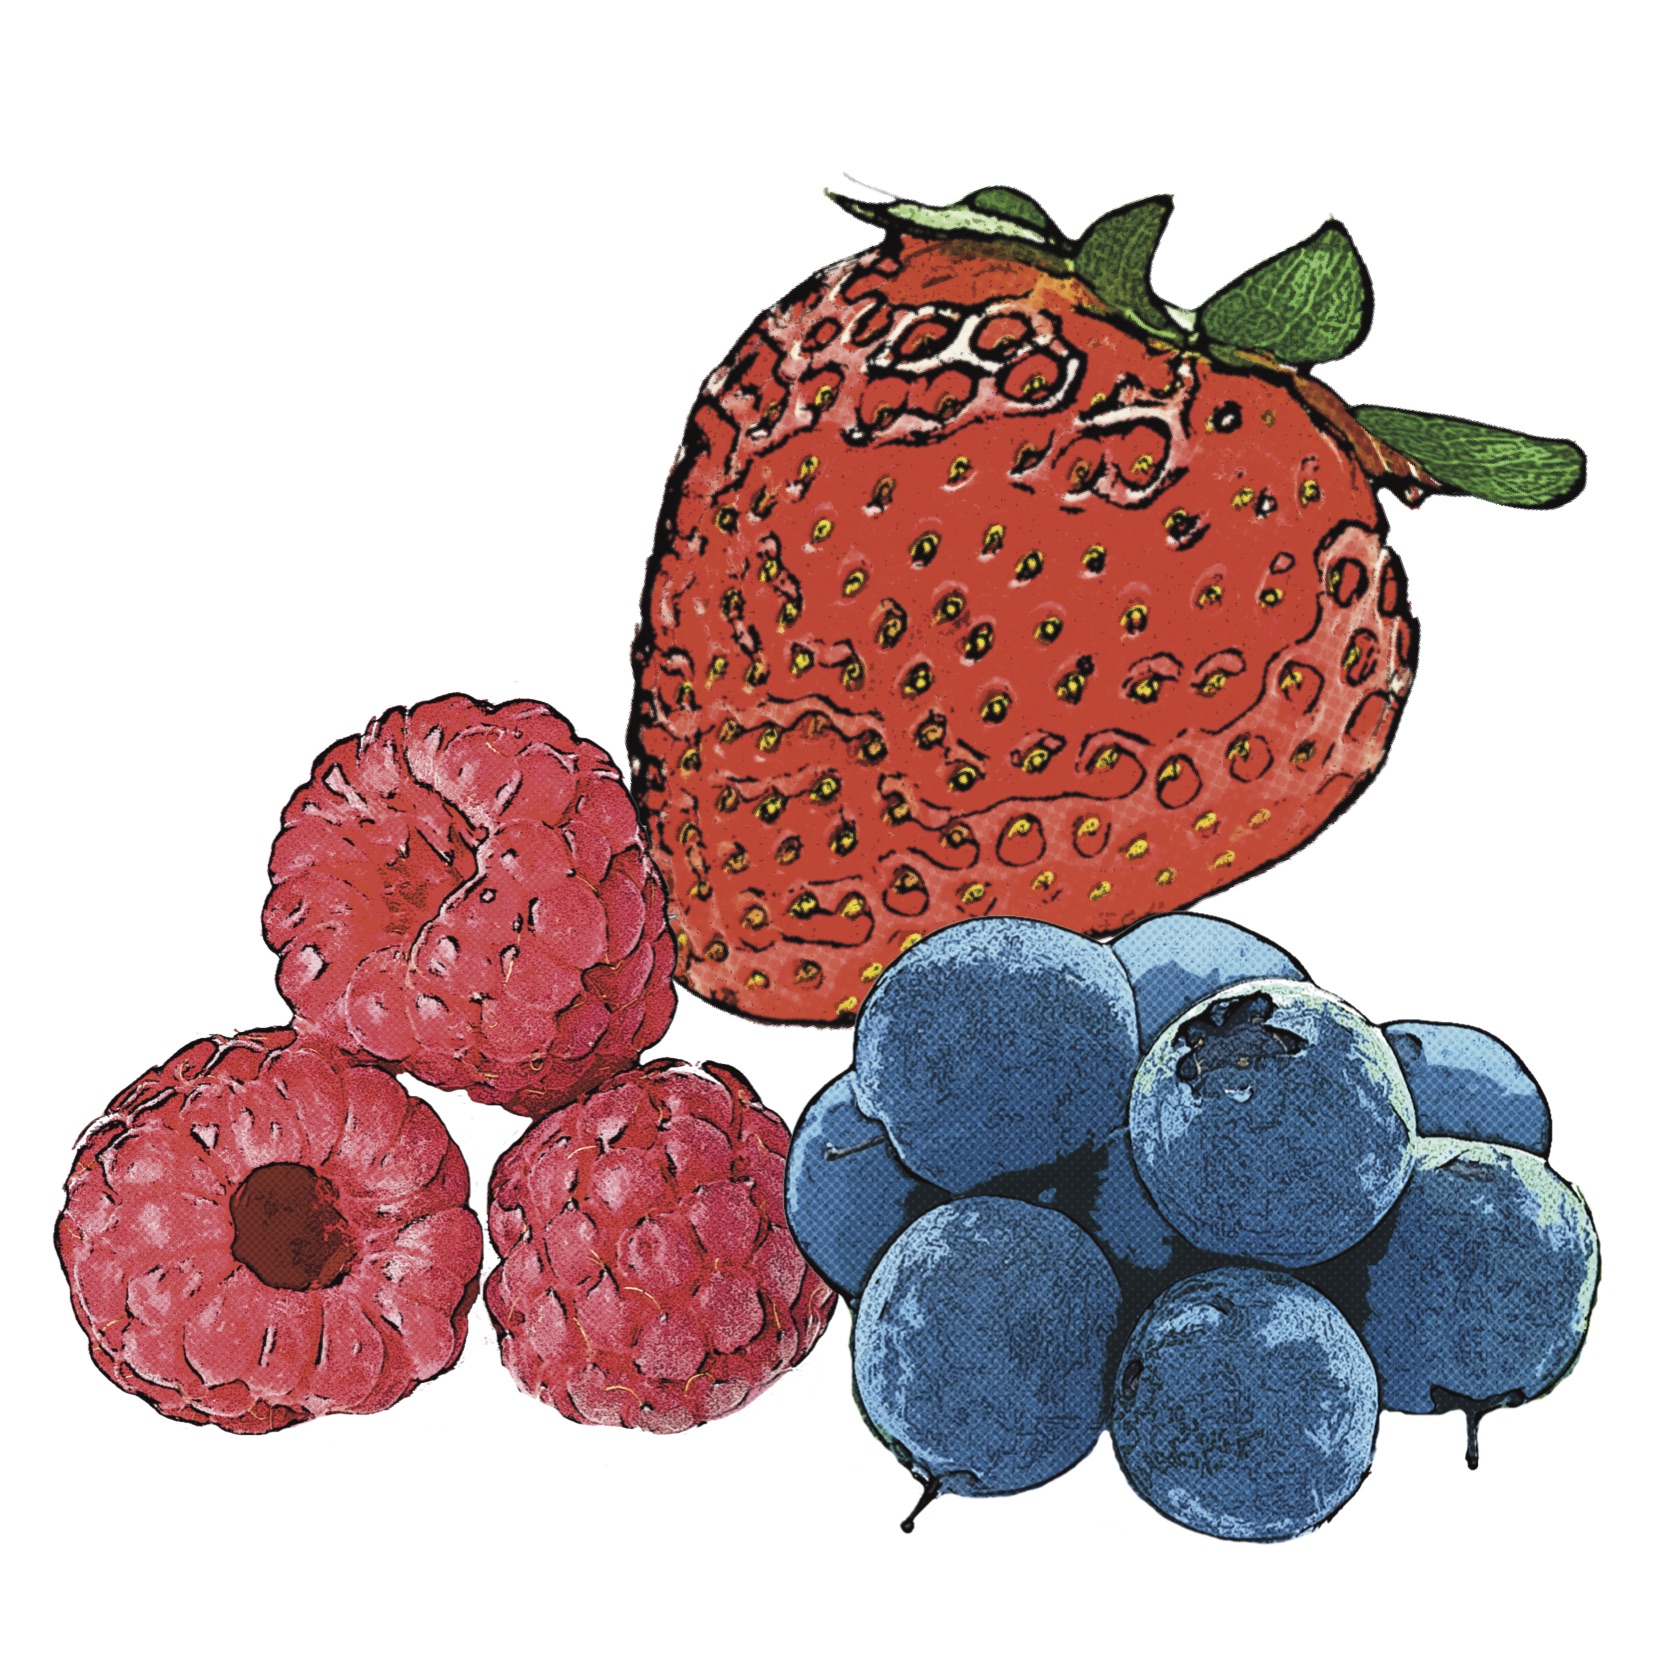 Find Berry Recipes